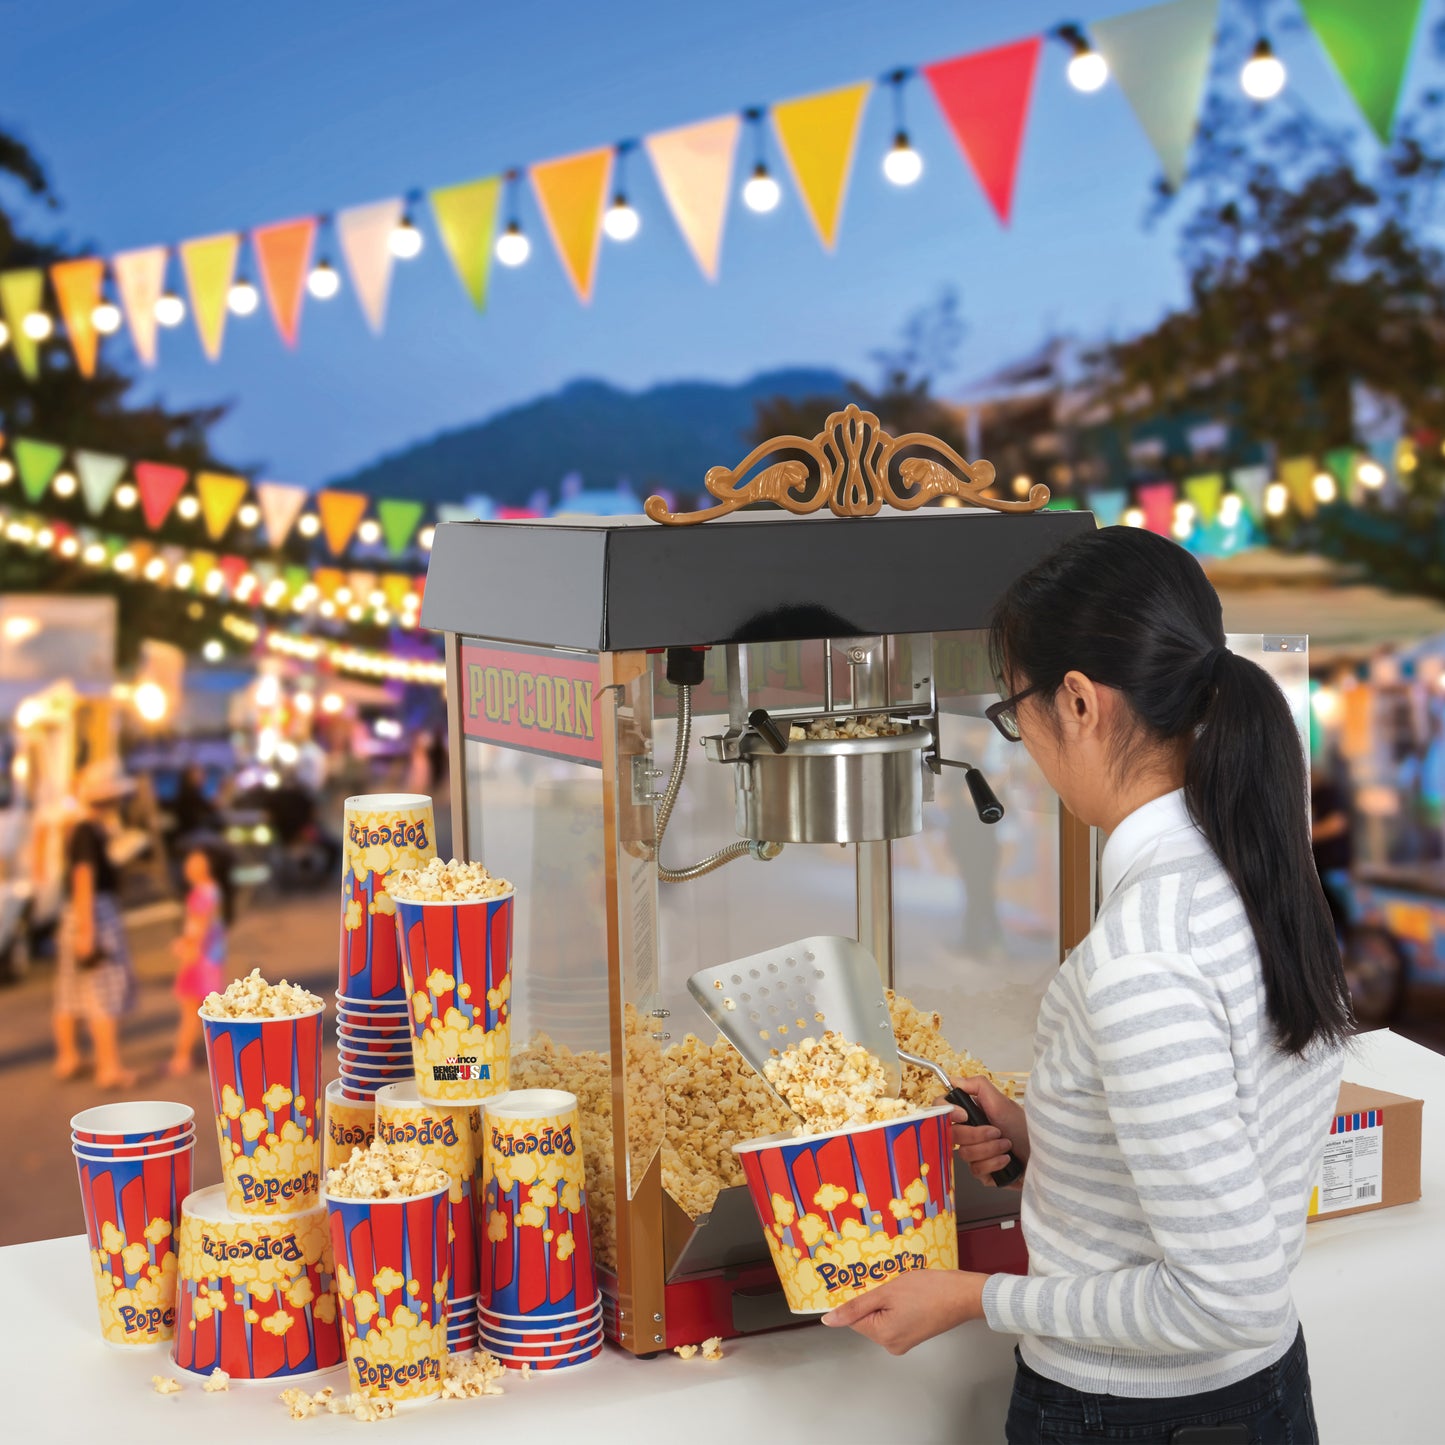 BenchmarkUSA Street Vendor Popcorn Machine - 6 oz